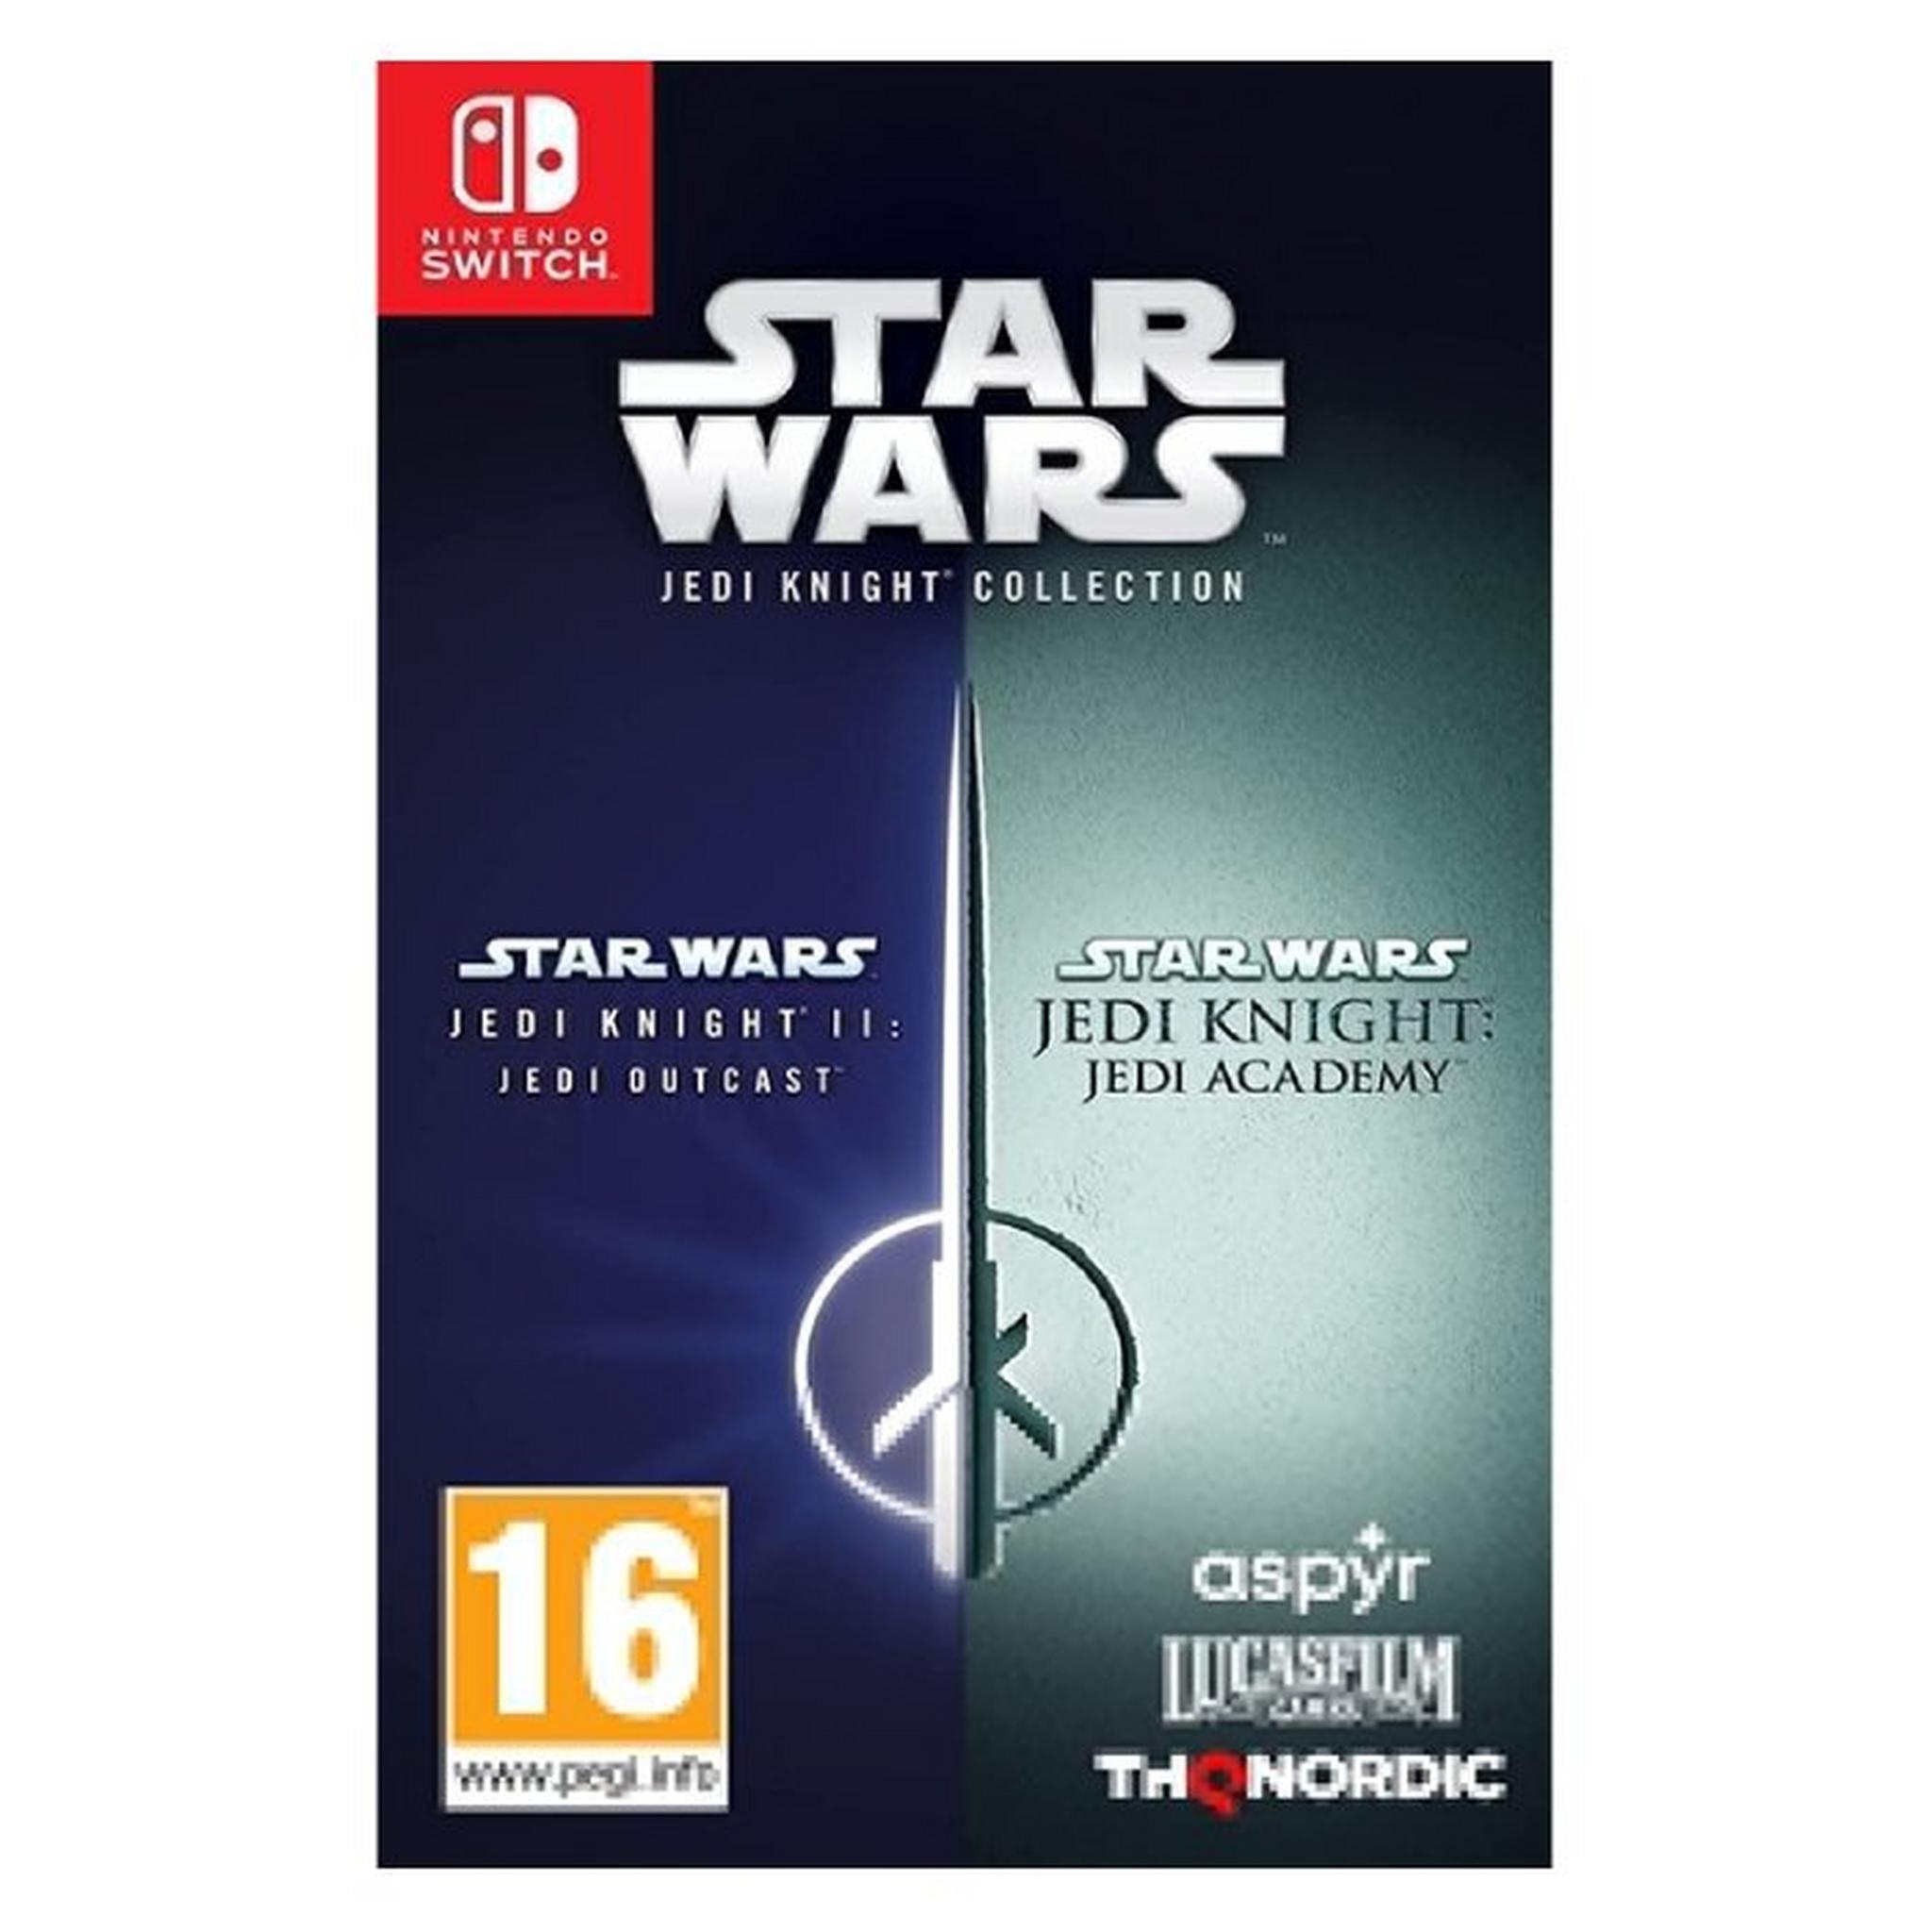 Star Wars Jedi Knight Collection - Nintendo Switch Game